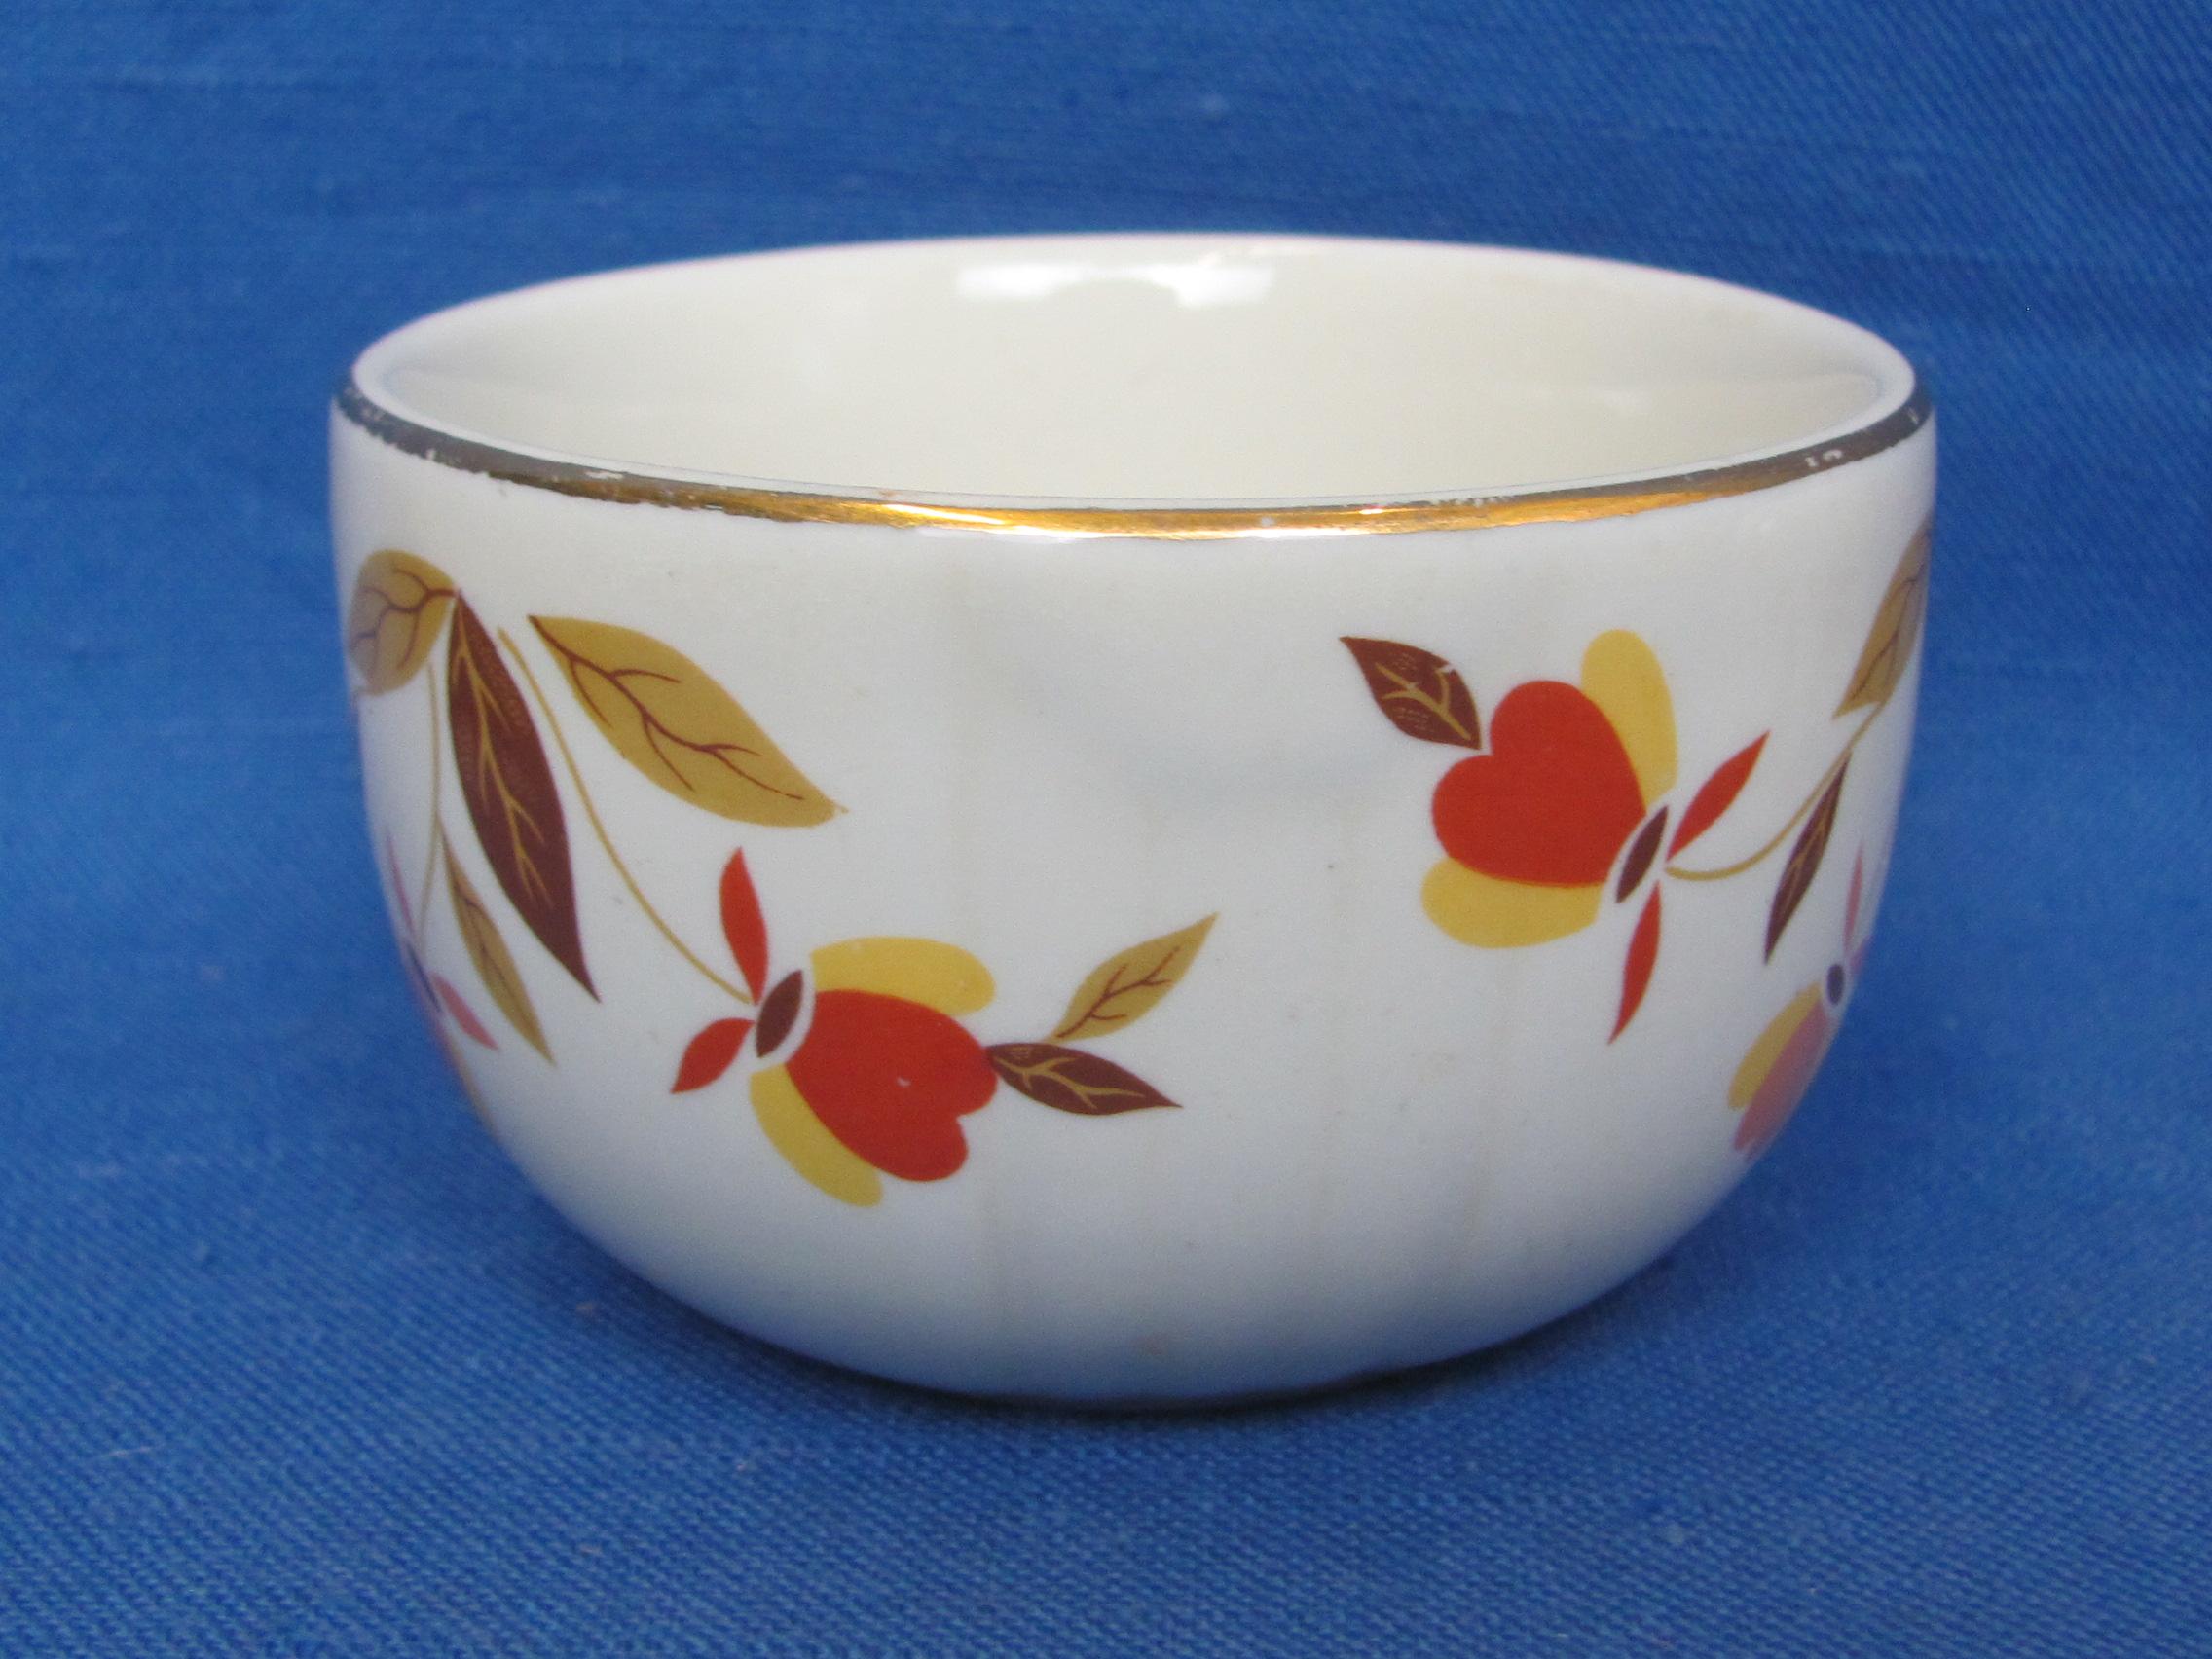 Set of 4 – Hall China Autumn Leaf Custard Cups – For Jewel Tea Co. - 3 1/2” in diameter